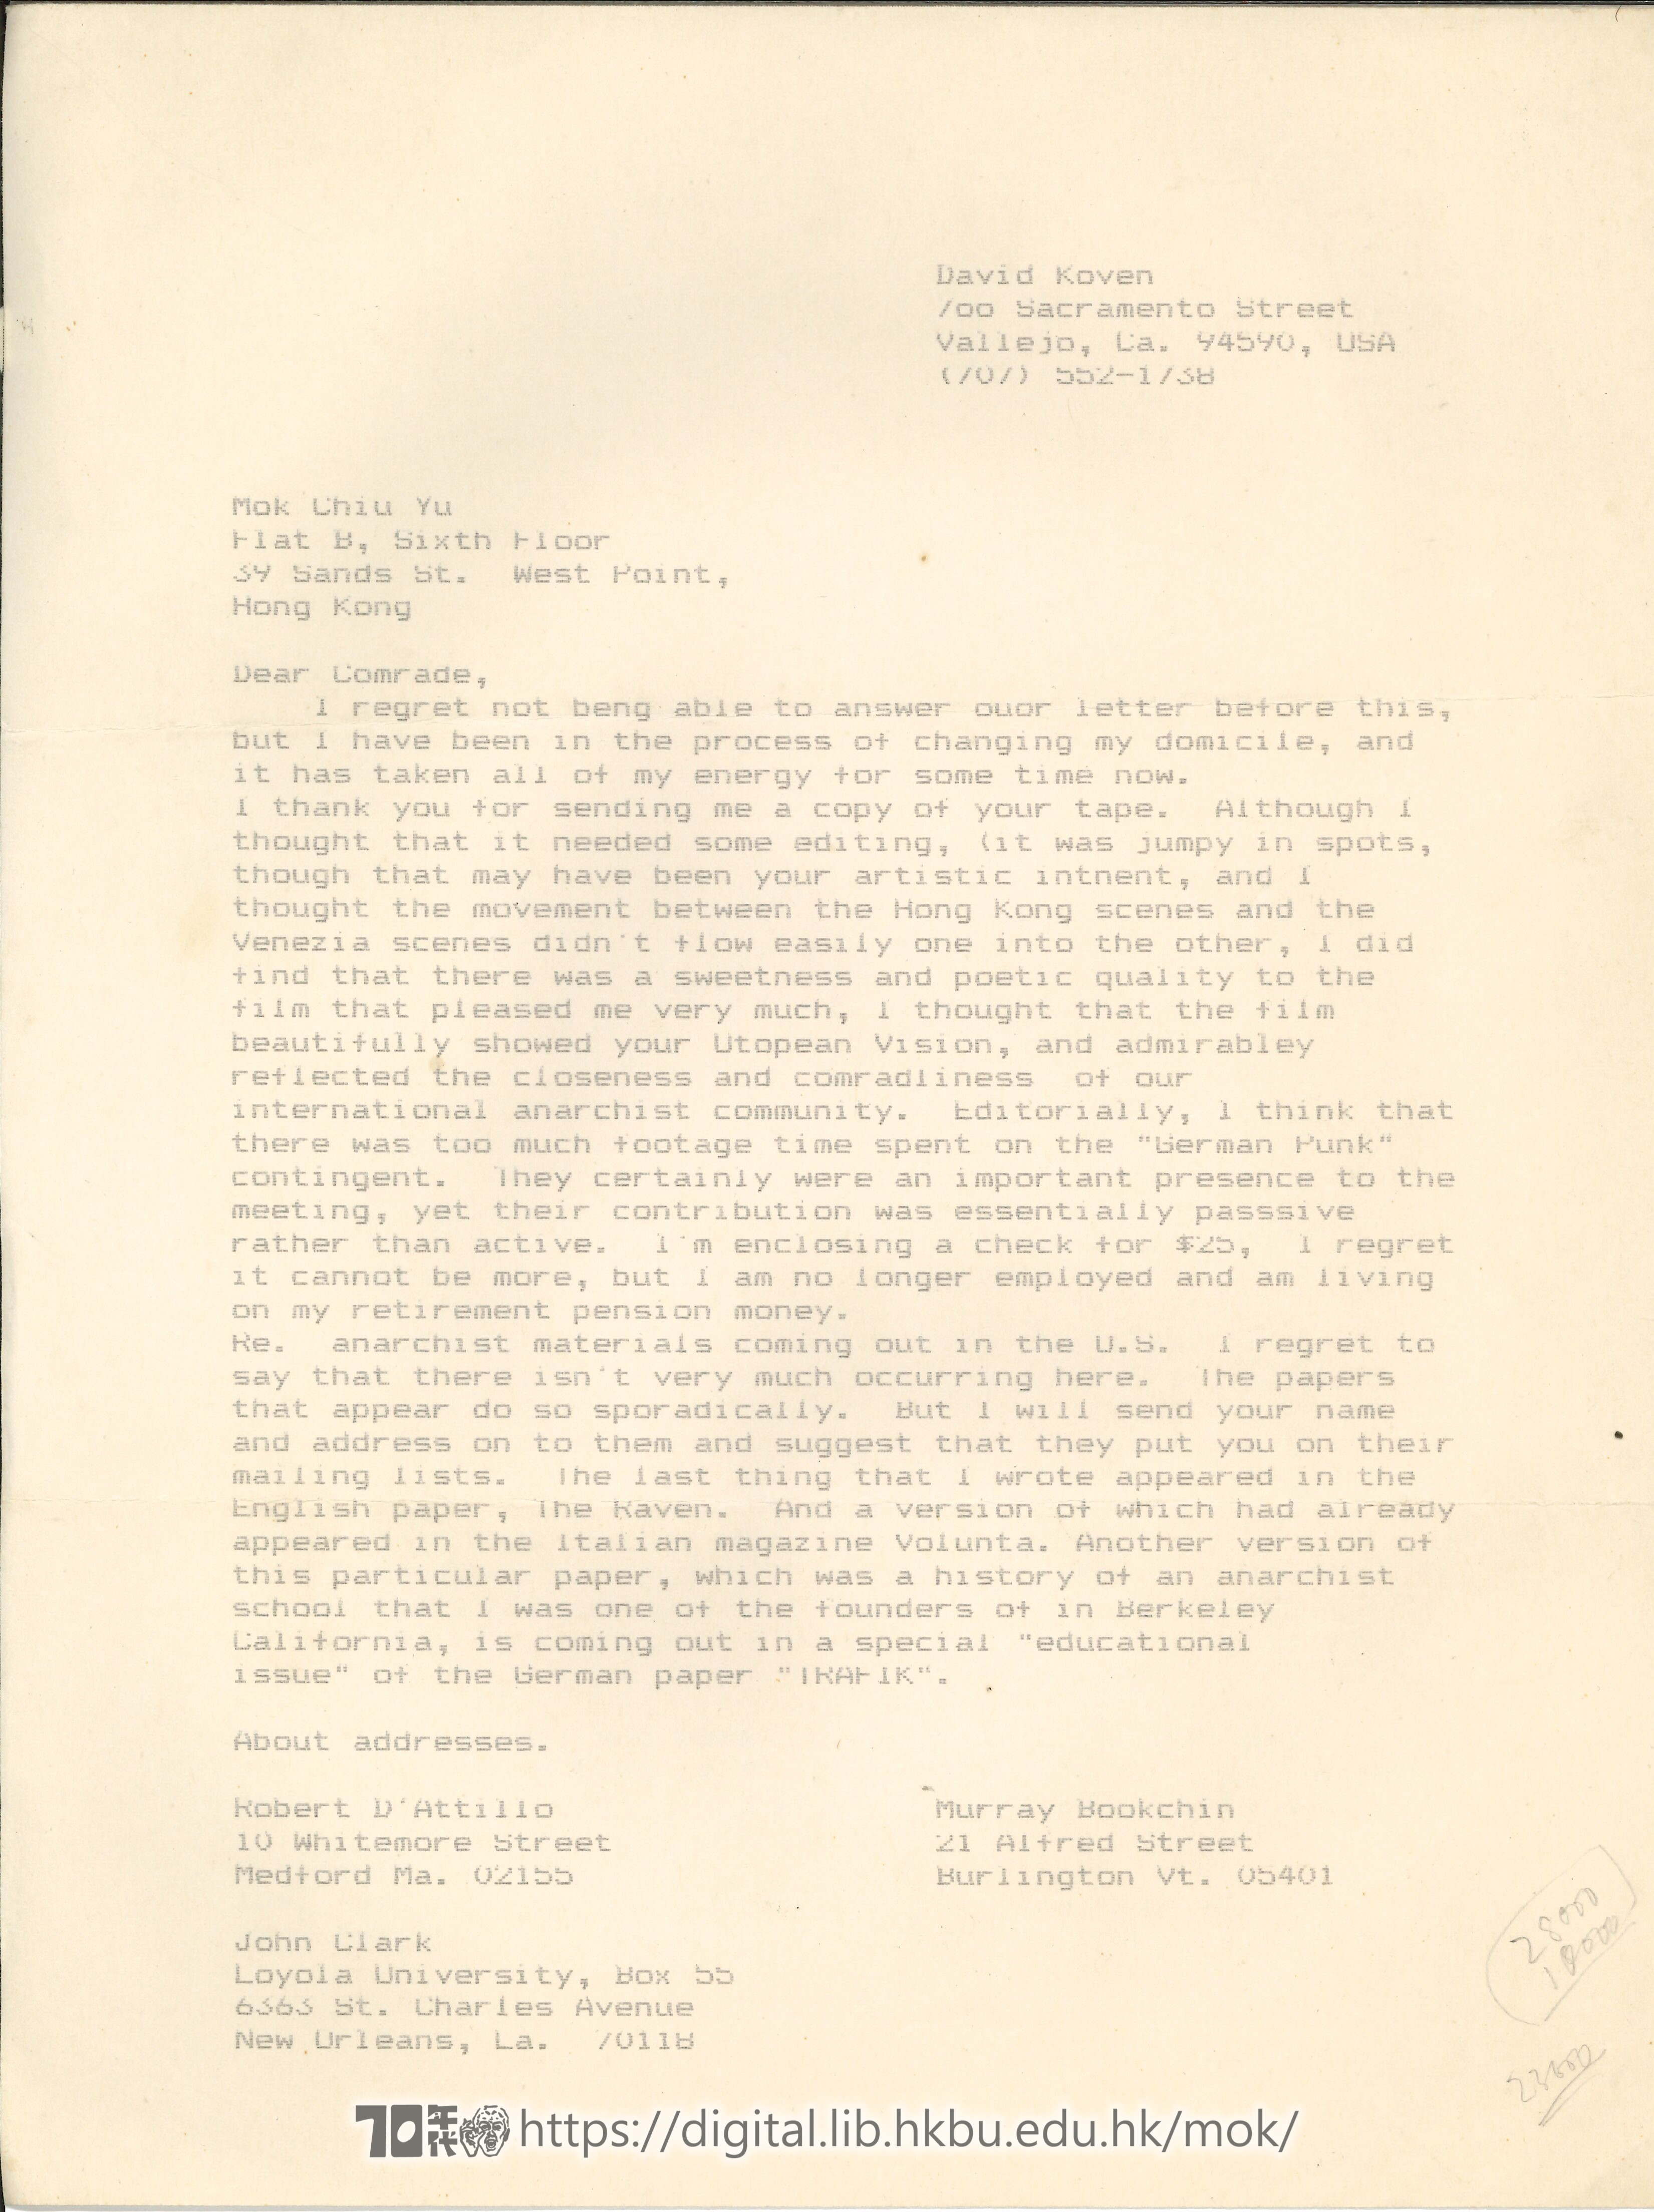   Letter from David Koven to Mok Chiu Yu KOVEN, David 